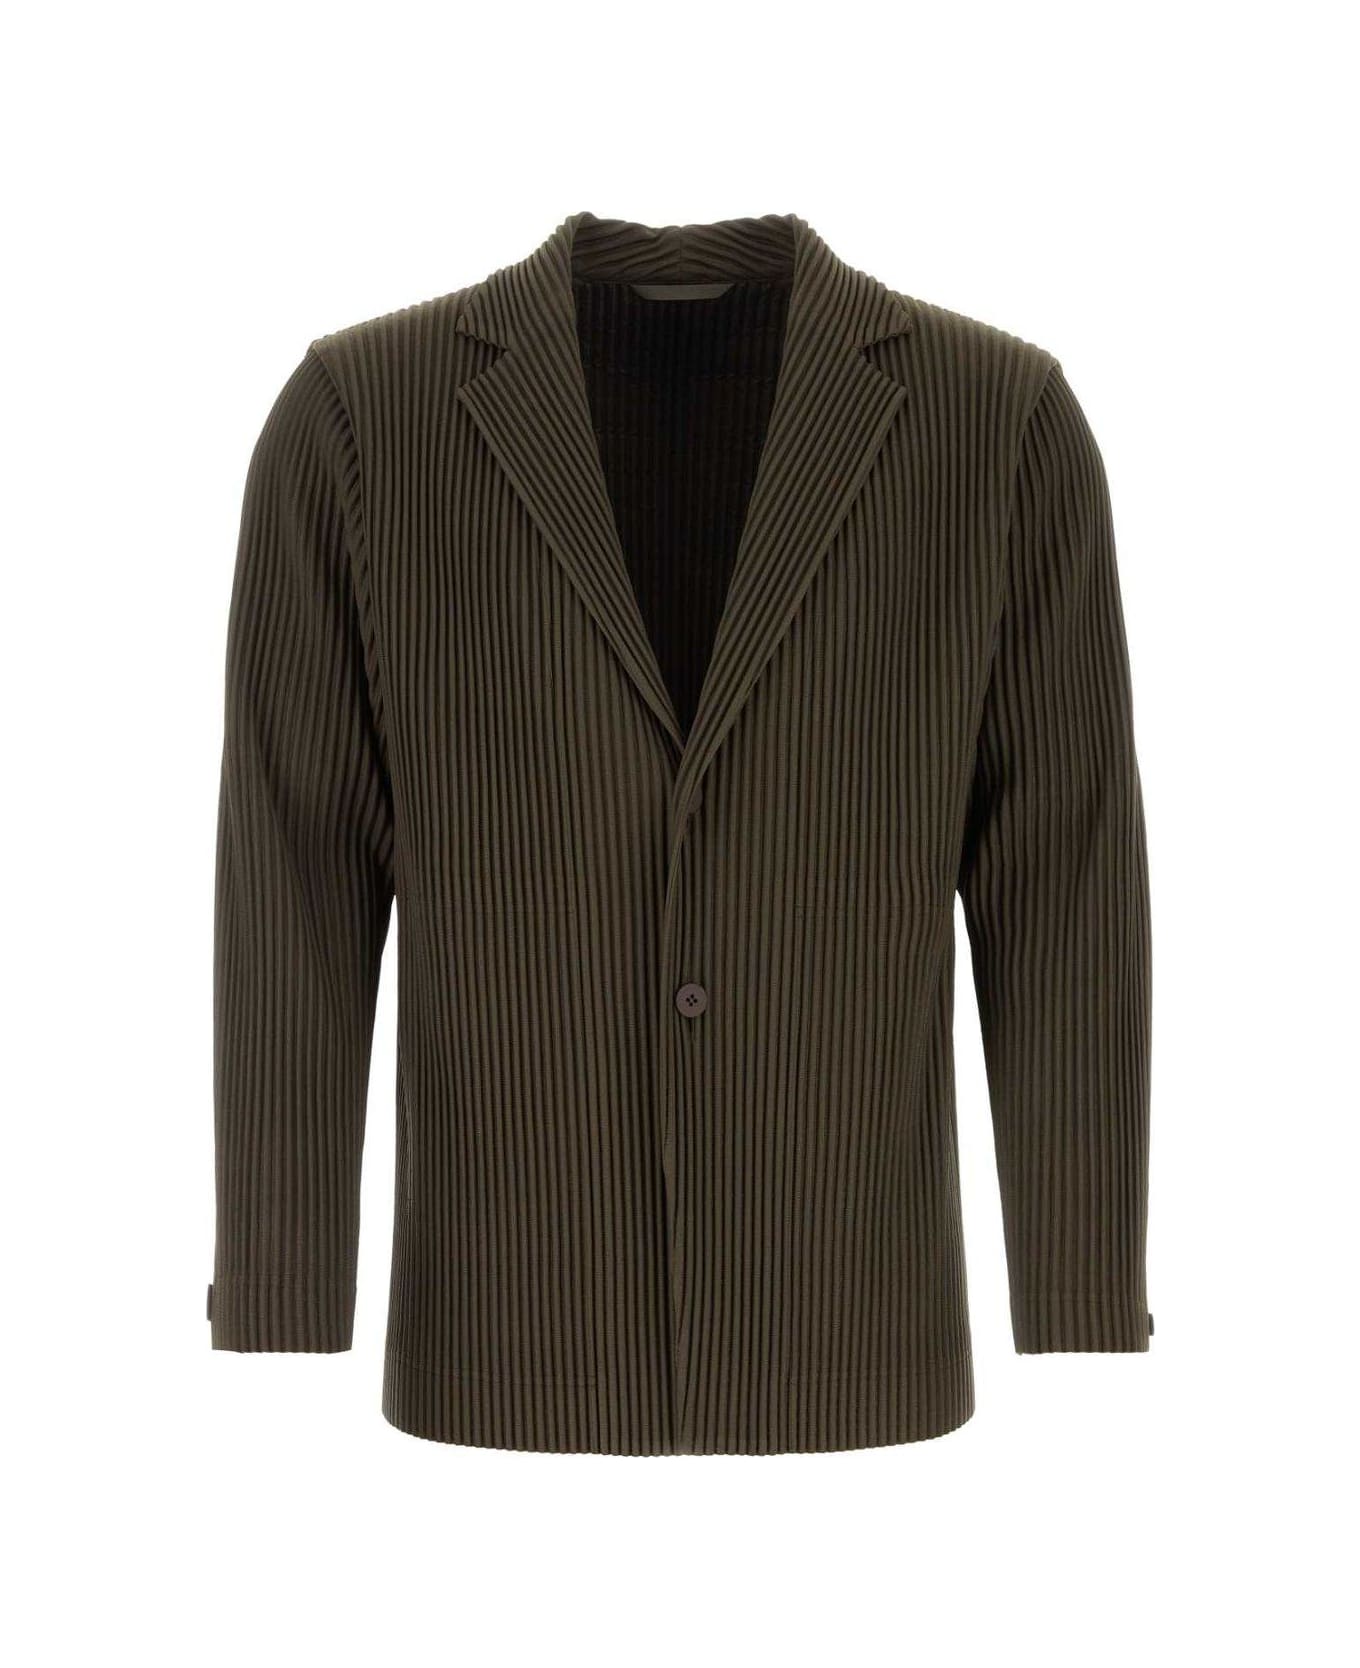 Homme Plissé Issey Miyake Single Breasted Tailored Pleats Jacket - Dark Khaki